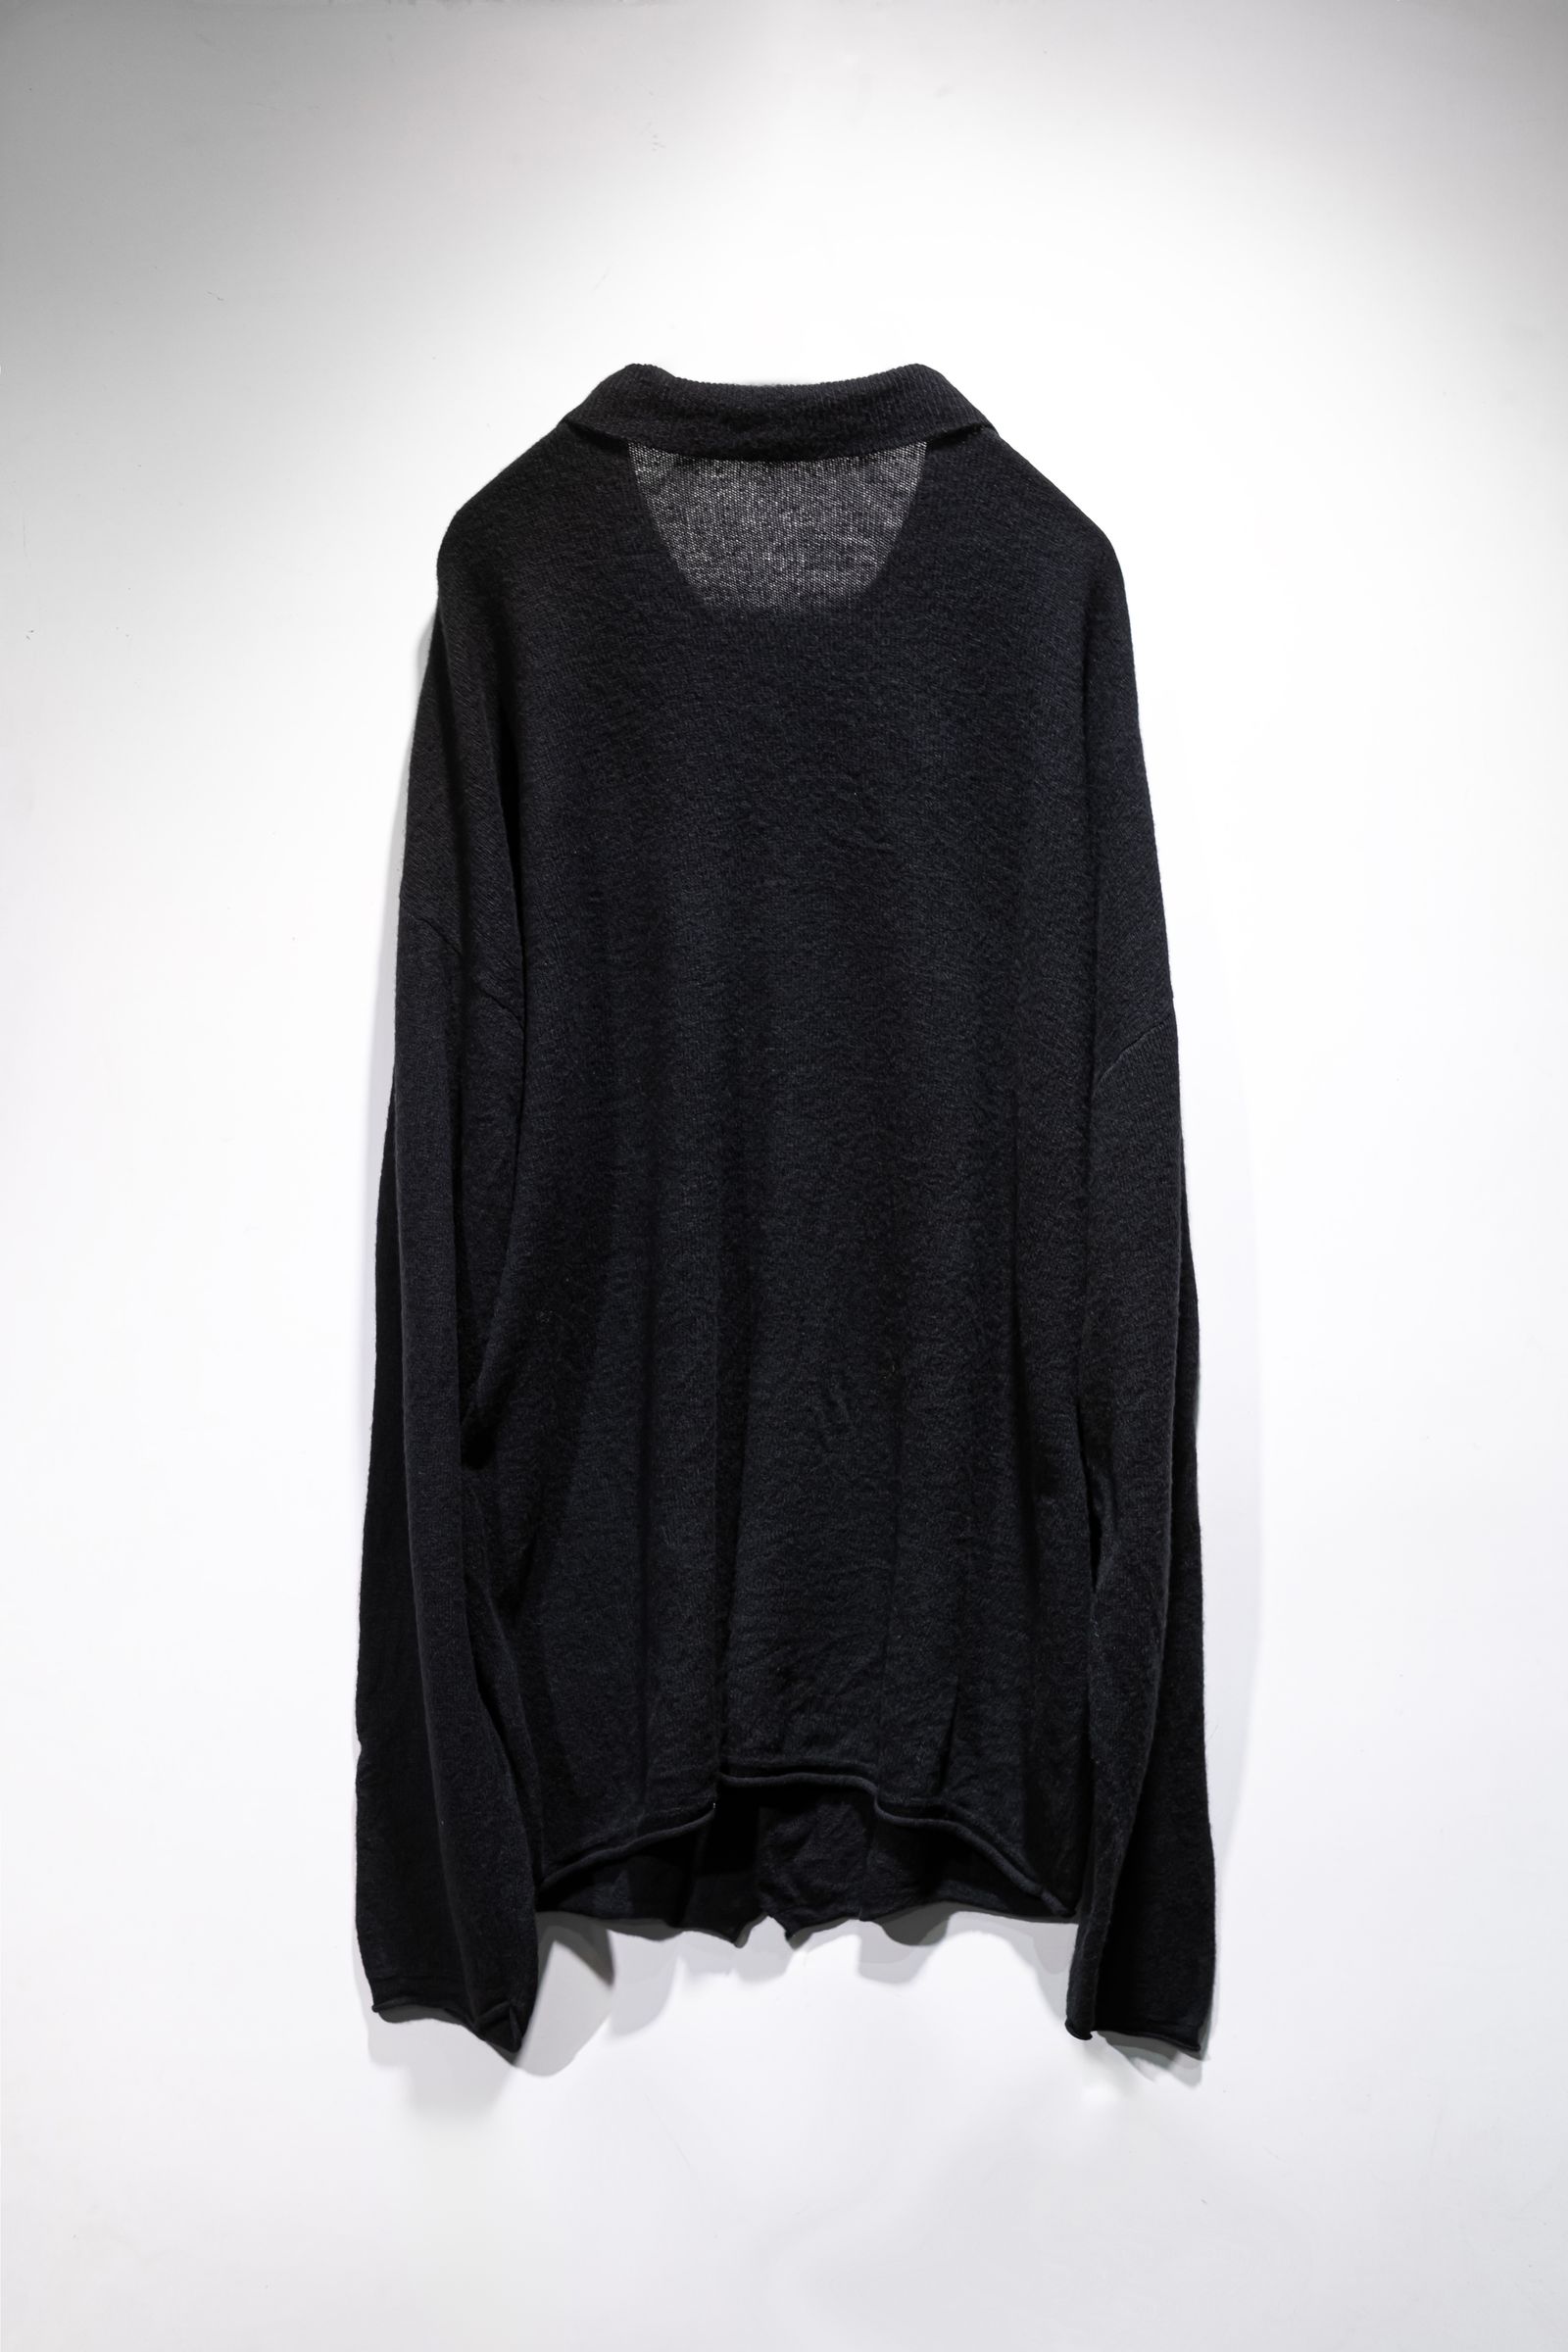 Blanc YM - 【Blanc YM×Retikle】Wool Cashmere Knit JKT | Retikle